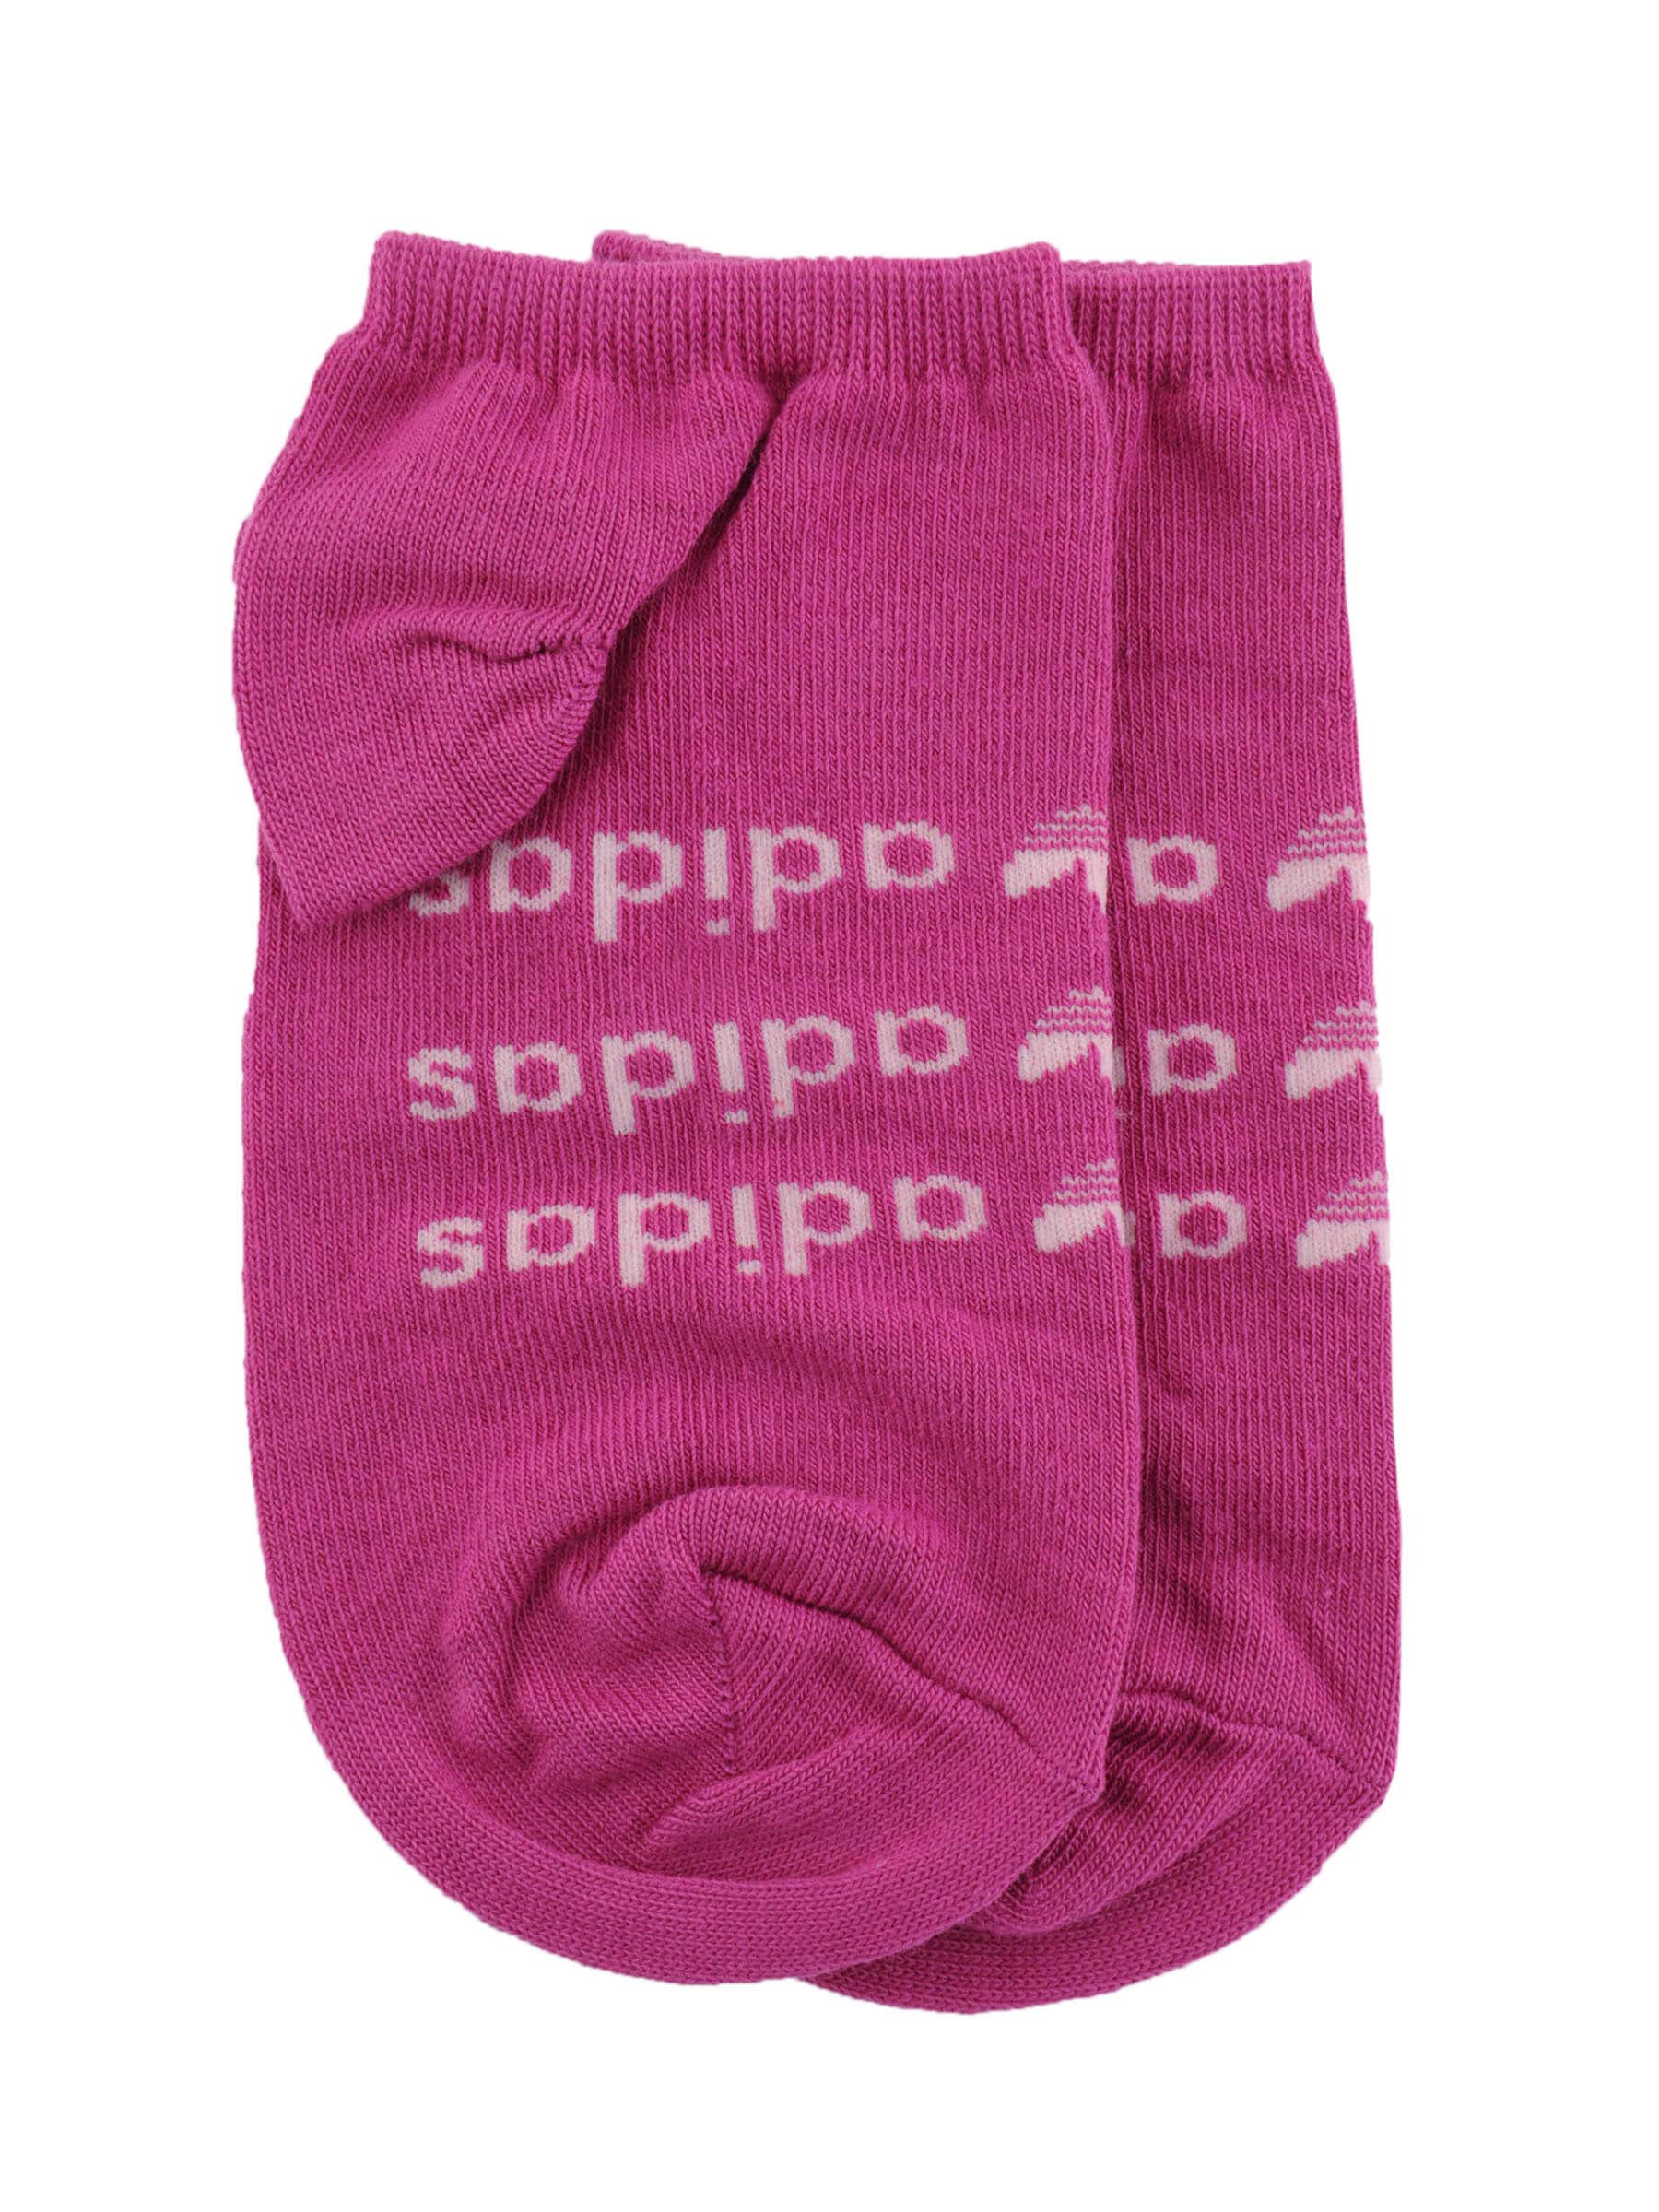 ADIDAS Originals Men Pink Casual Socks